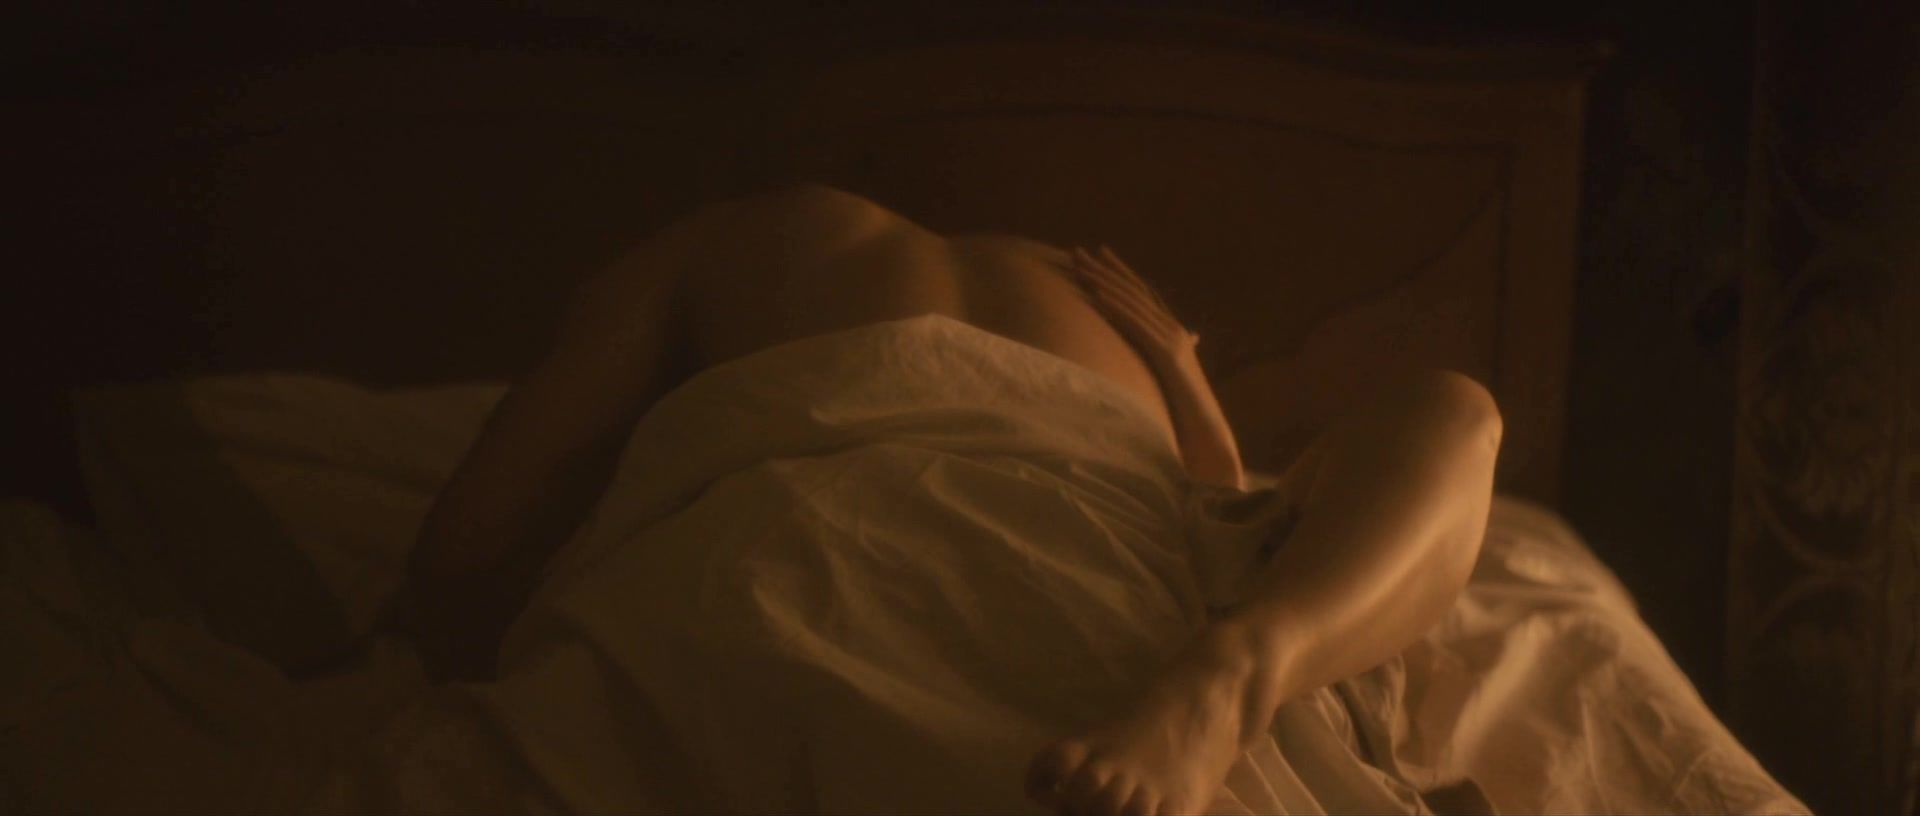 Movies Sex video Evan Rachel Wood nude - The Necessary Death of Charlie Countryman (2013) Pjorn